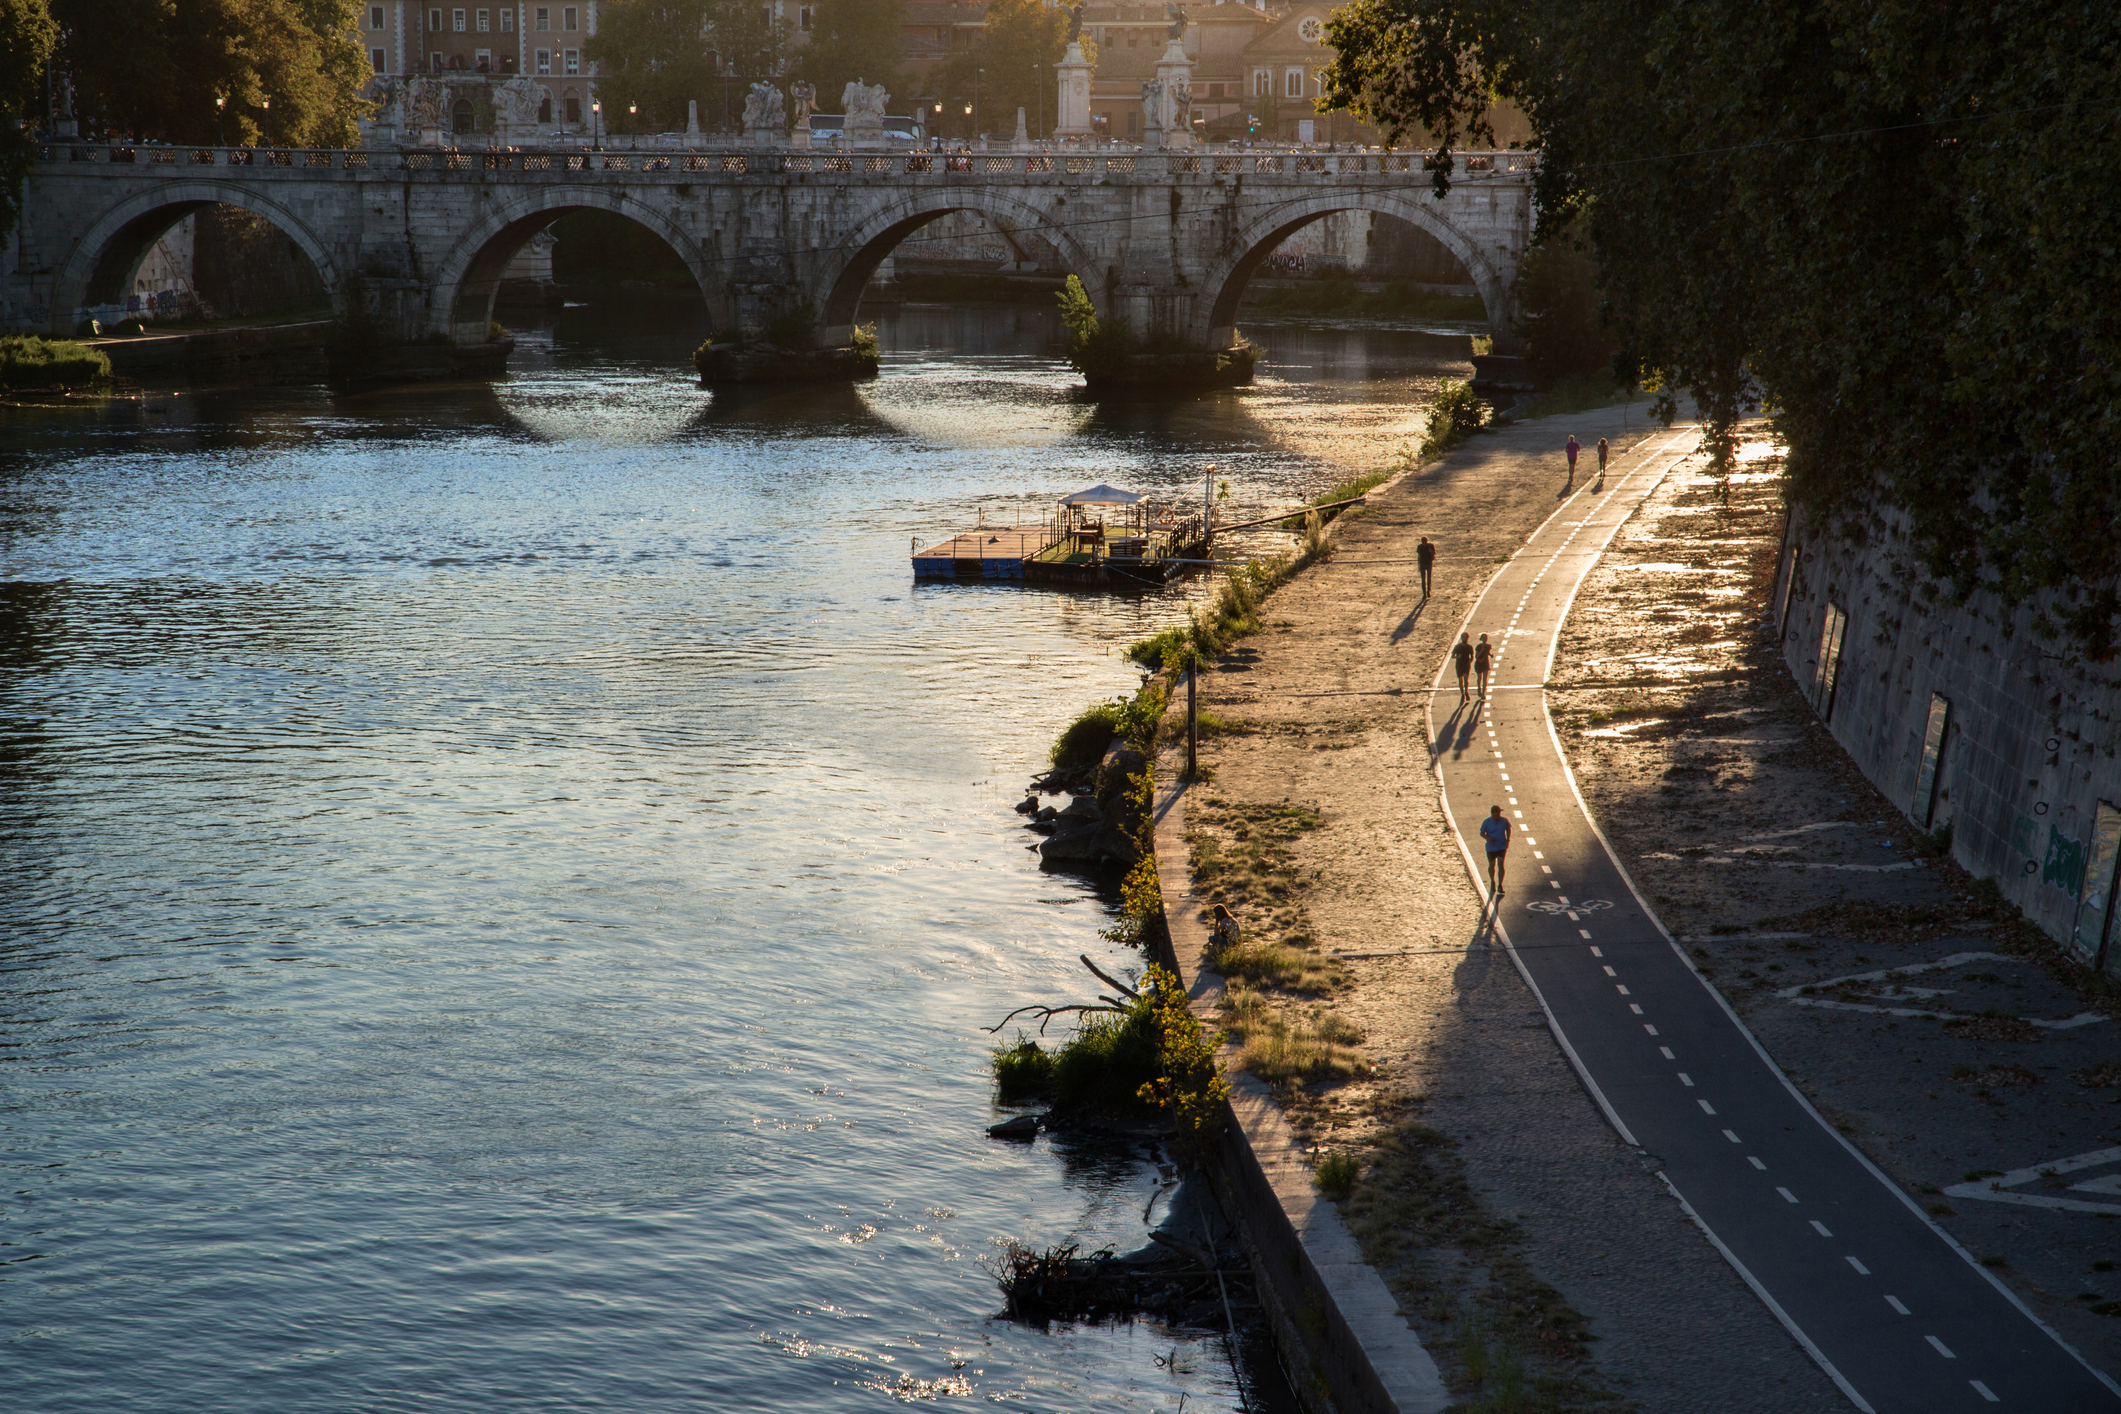 Stone bridge over the Tiber in Rome